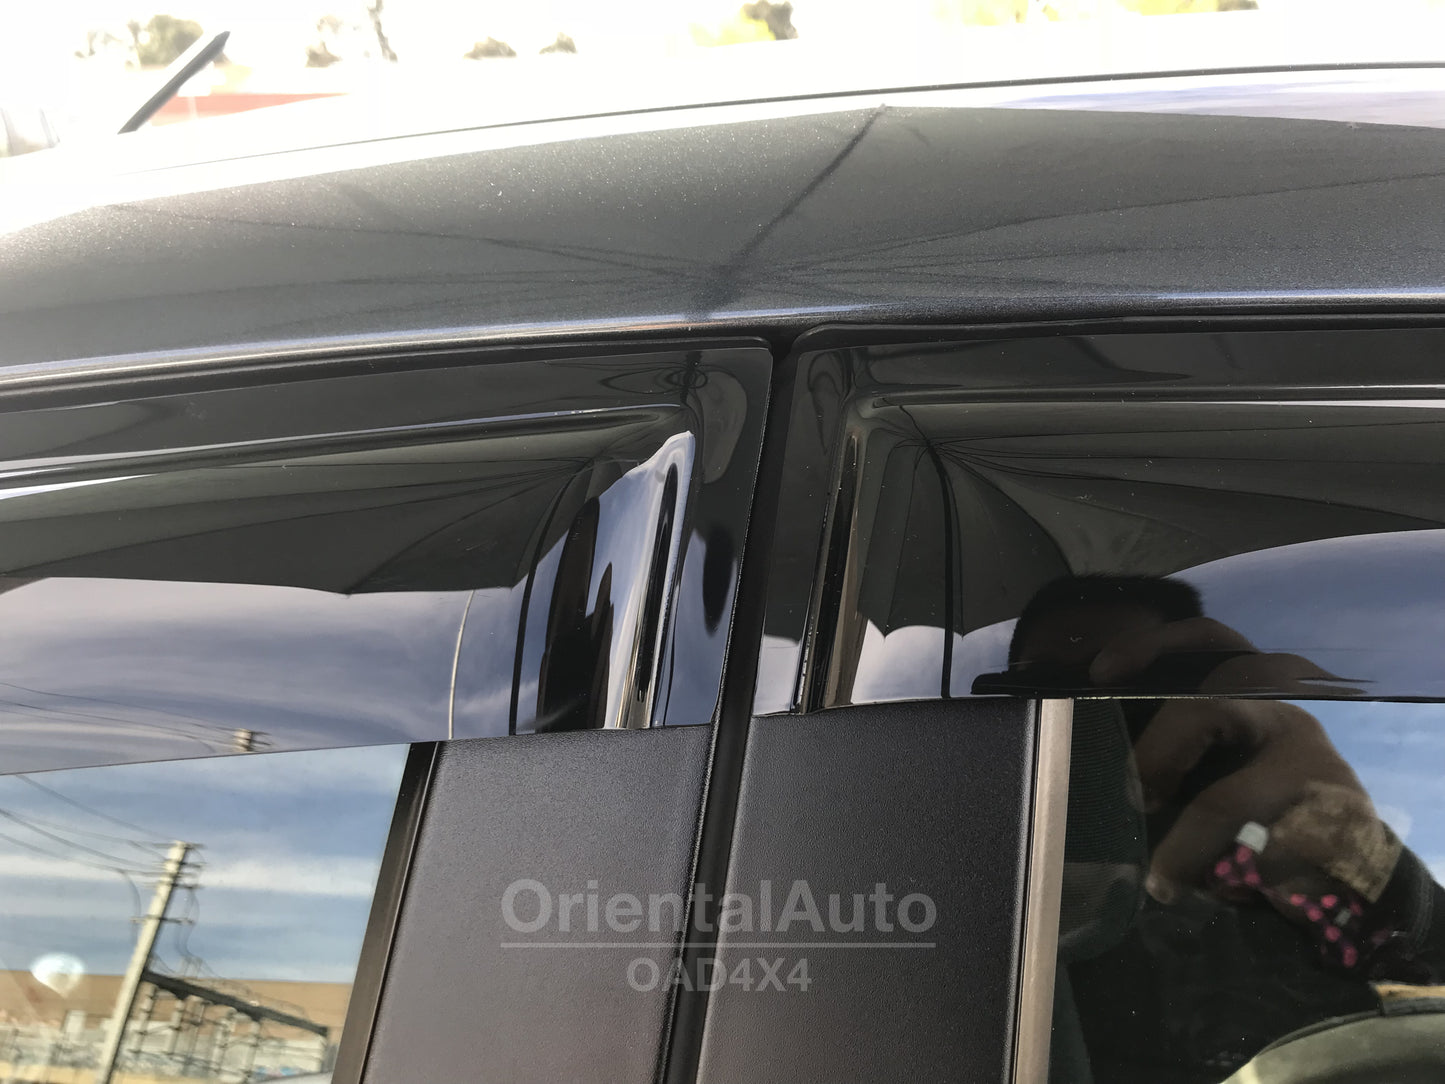 Premium Weathershields Weather Shields Window Visor For Ford Fiesta WT Series Sedan 2010-2019